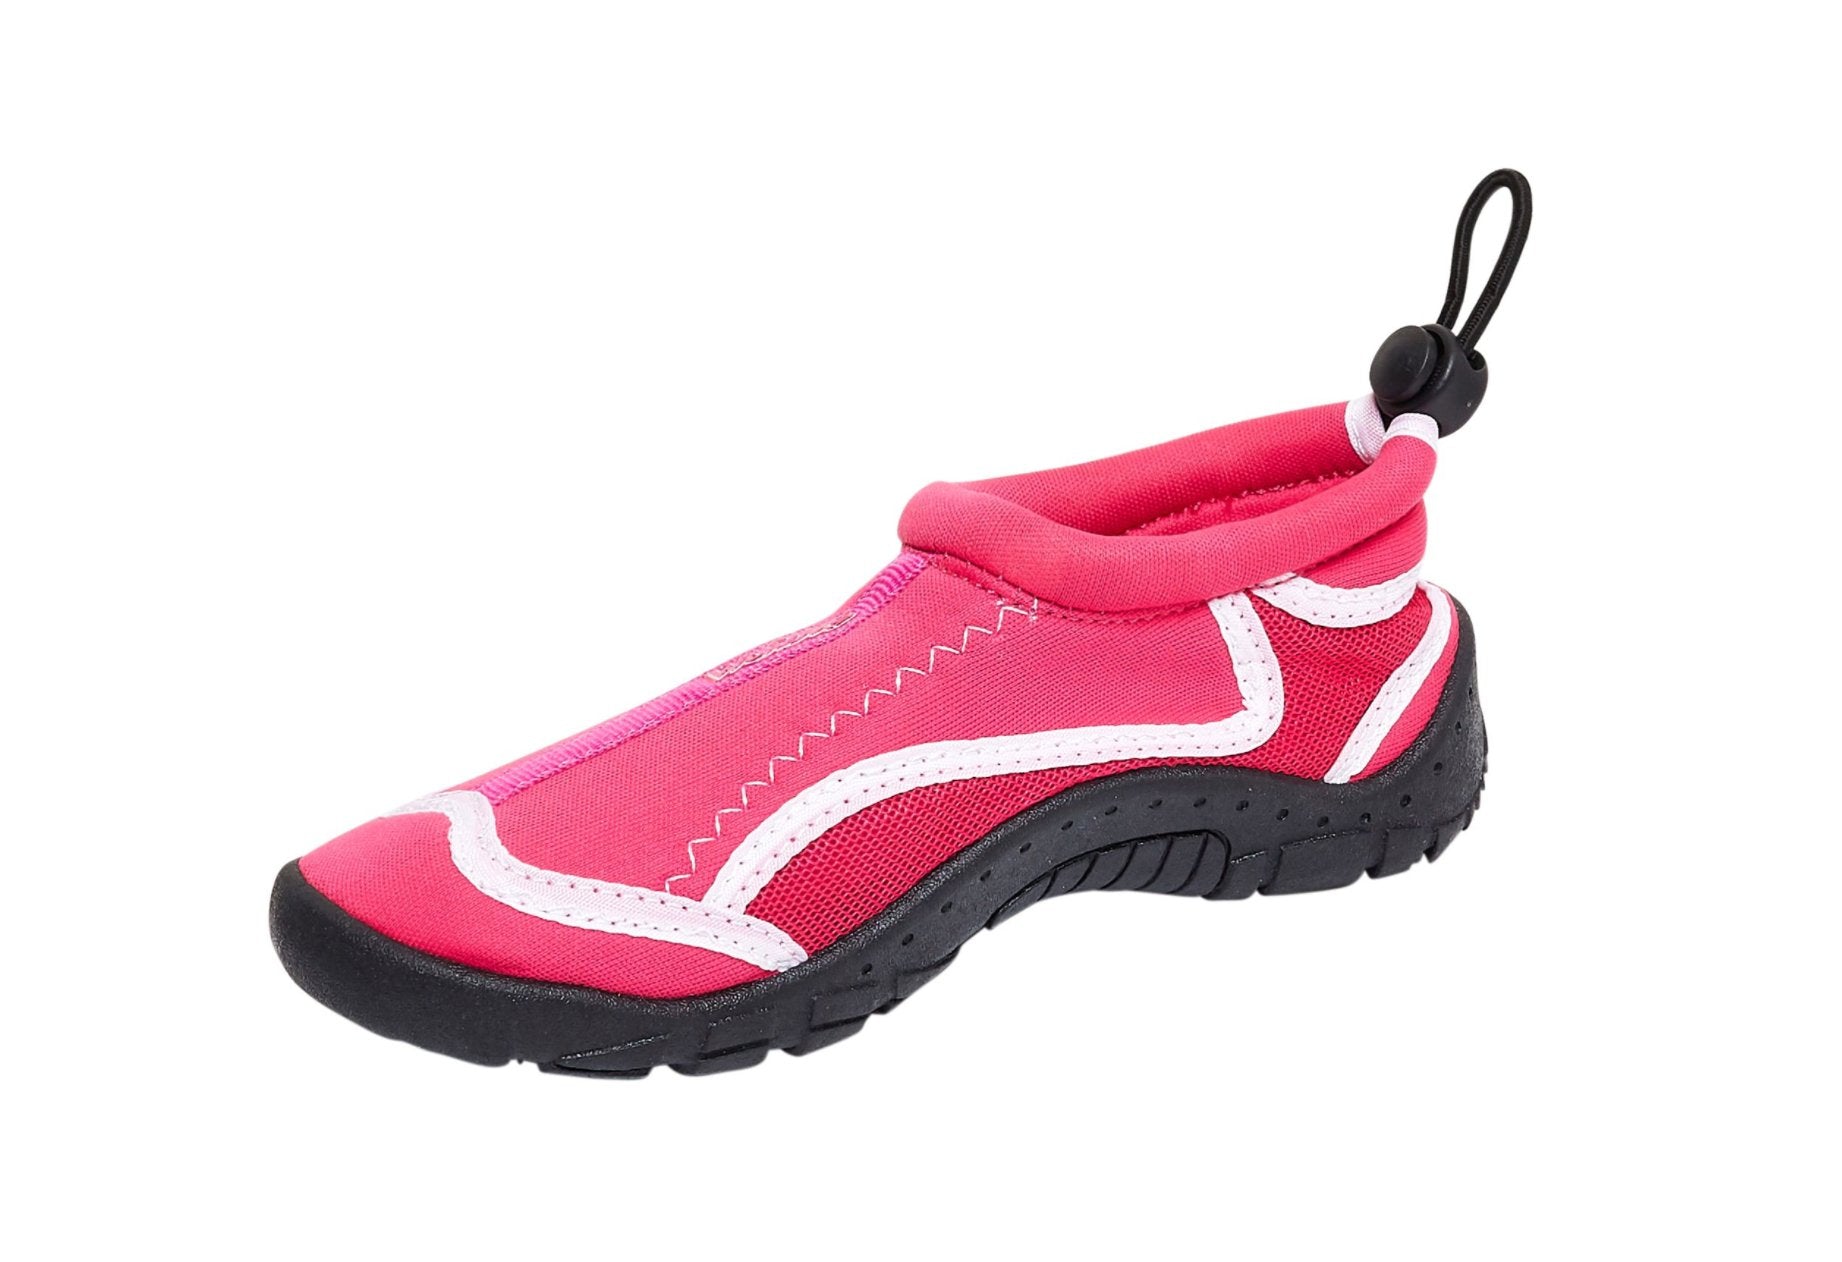 Typhoon Kids Swarm / Beach Shoes - Worthing Watersports - 470508 - Shoes - Typhoon